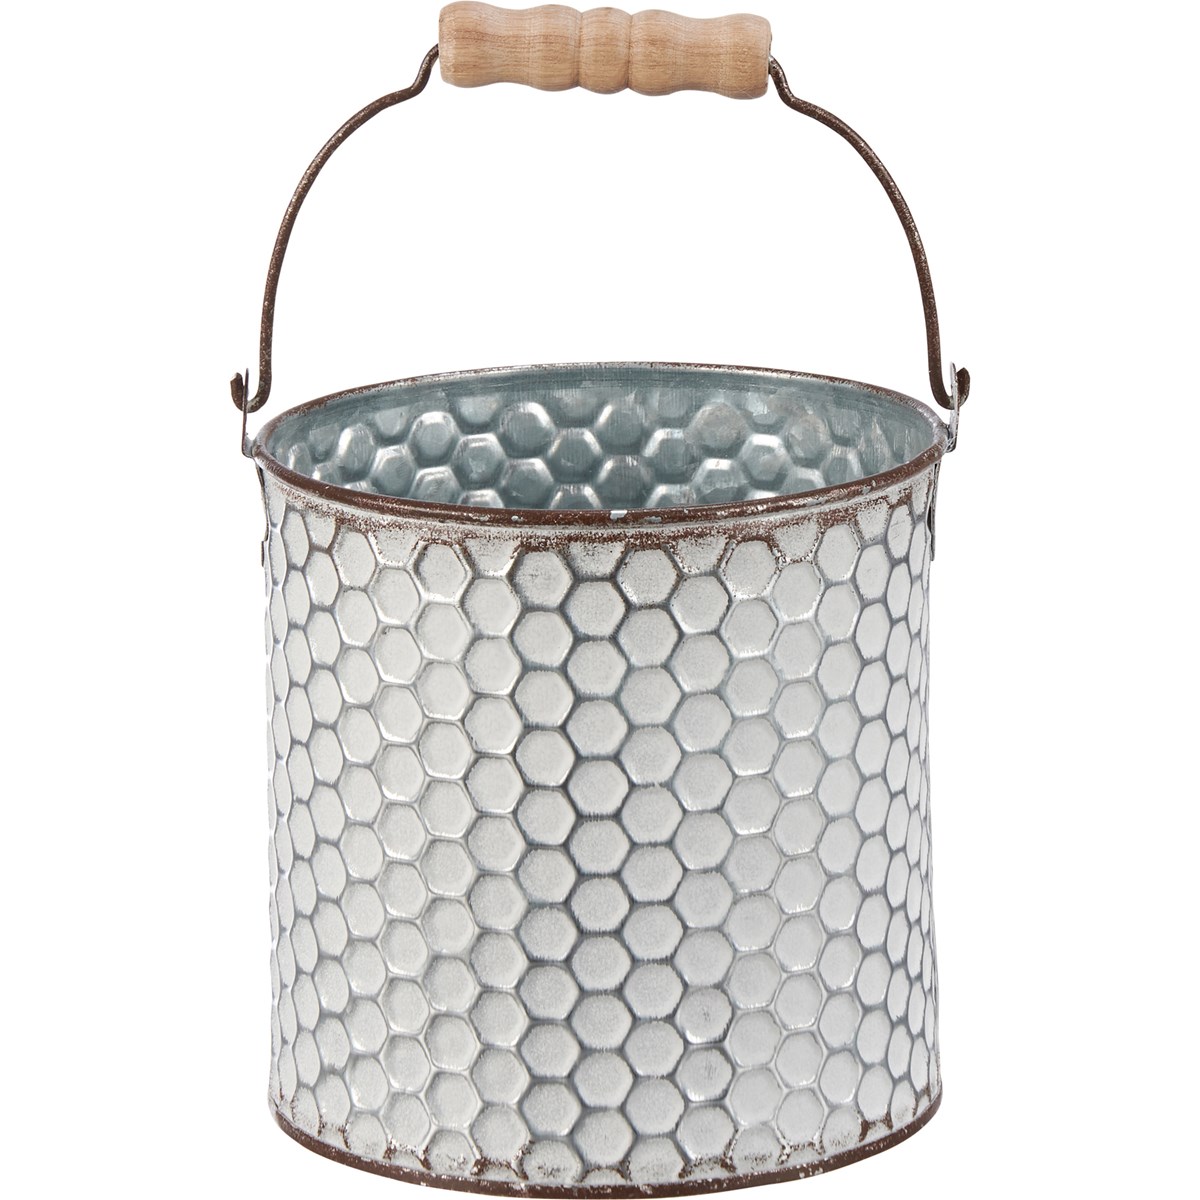 Honeycomb Bucket Set - Metal, Wood